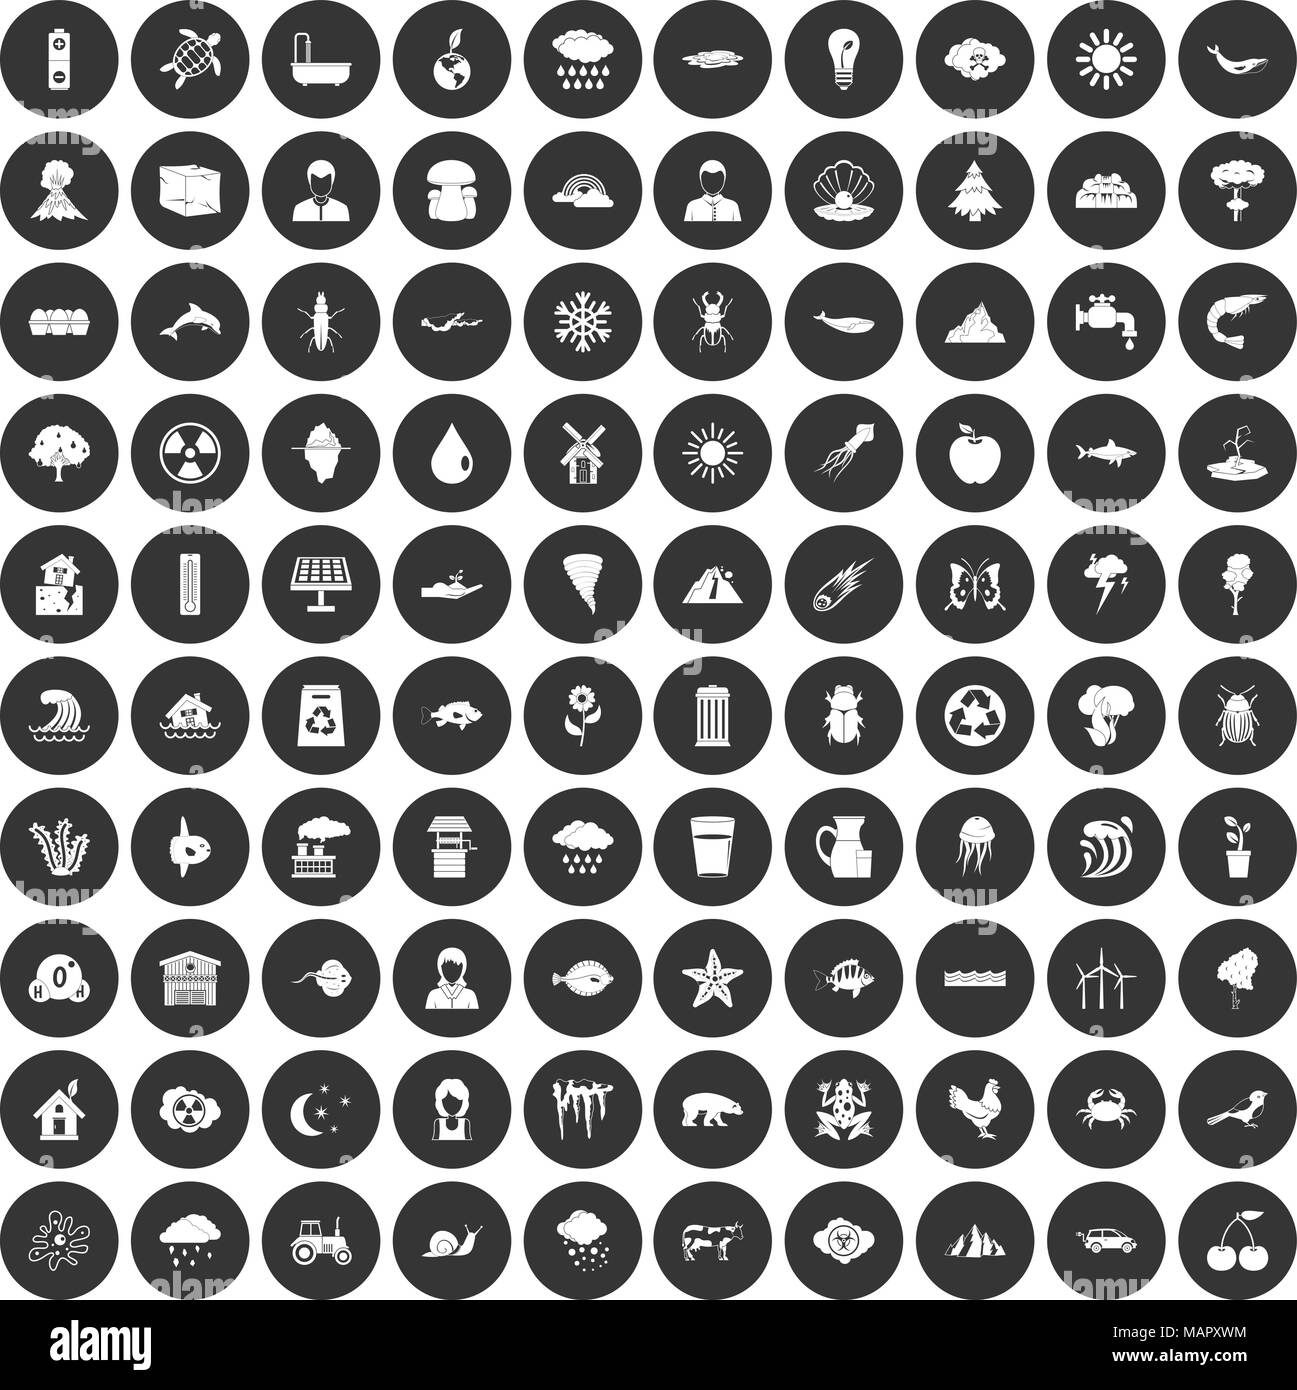 100 earth icons set black circle Stock Vector